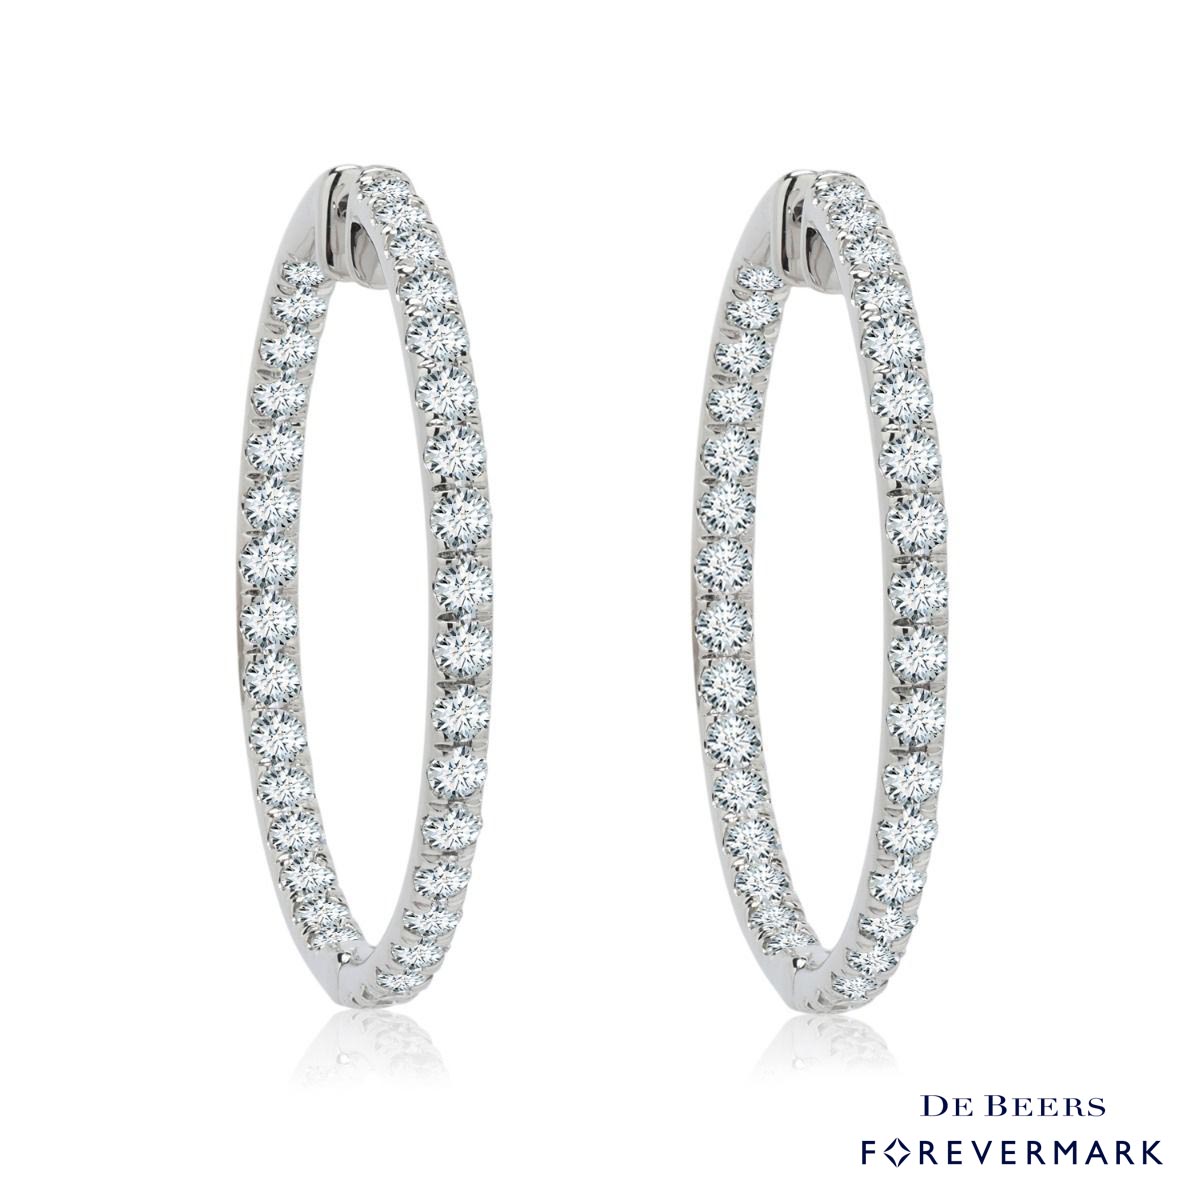 De Beers Forevermark Diamond Hoop Earrings in 14kt White Gold (6ct tw)